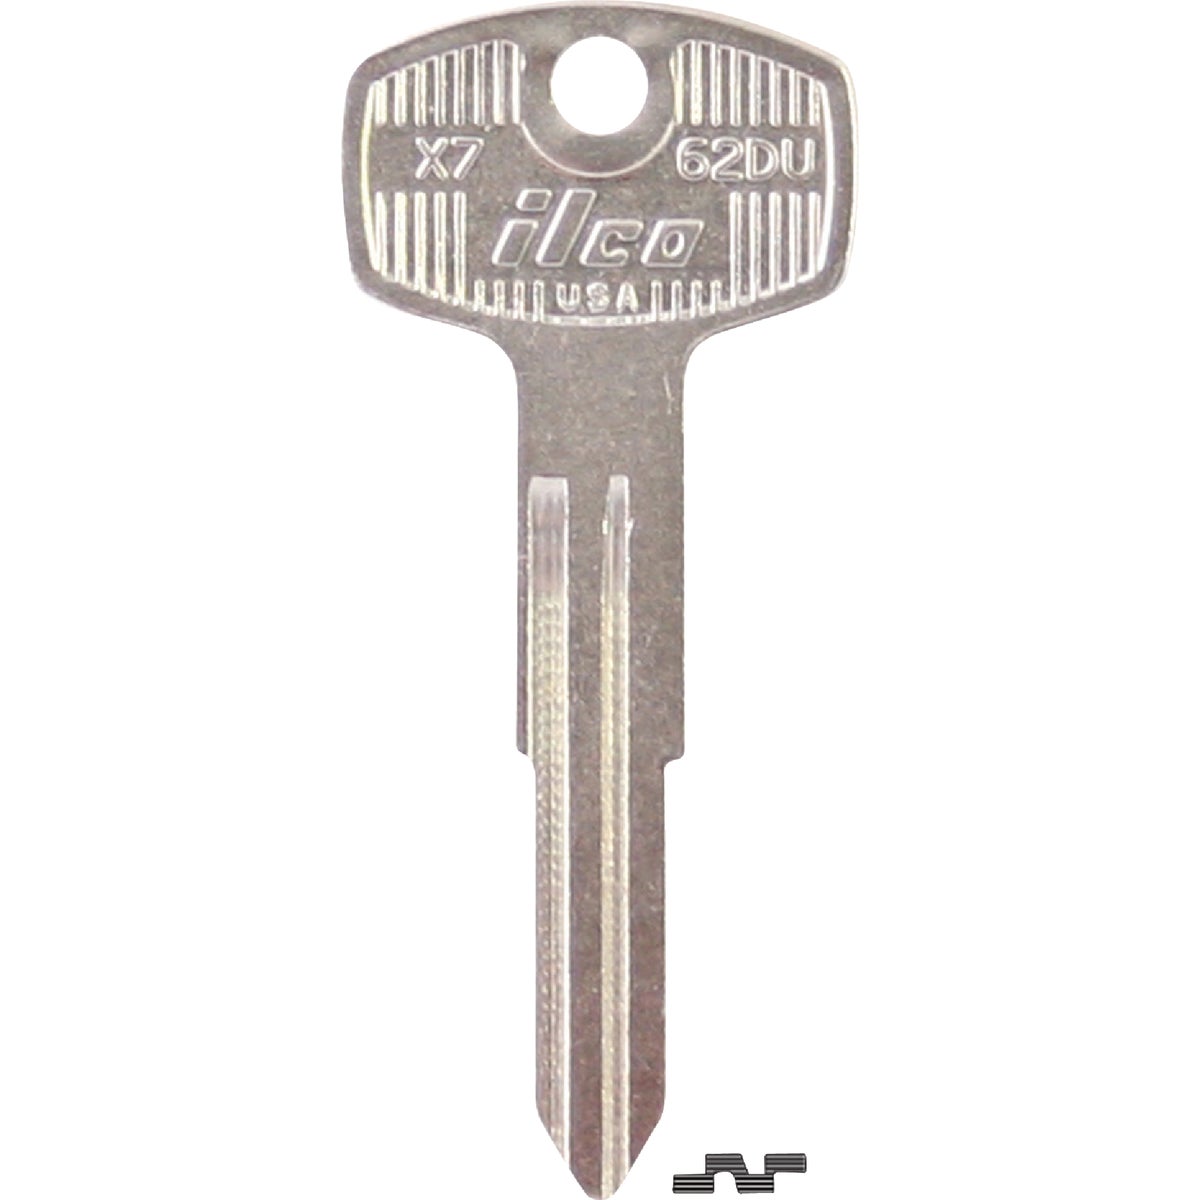 ILCO DATSUN Nickel Plated Automotive Key 62DU / X7 (10-Pack)